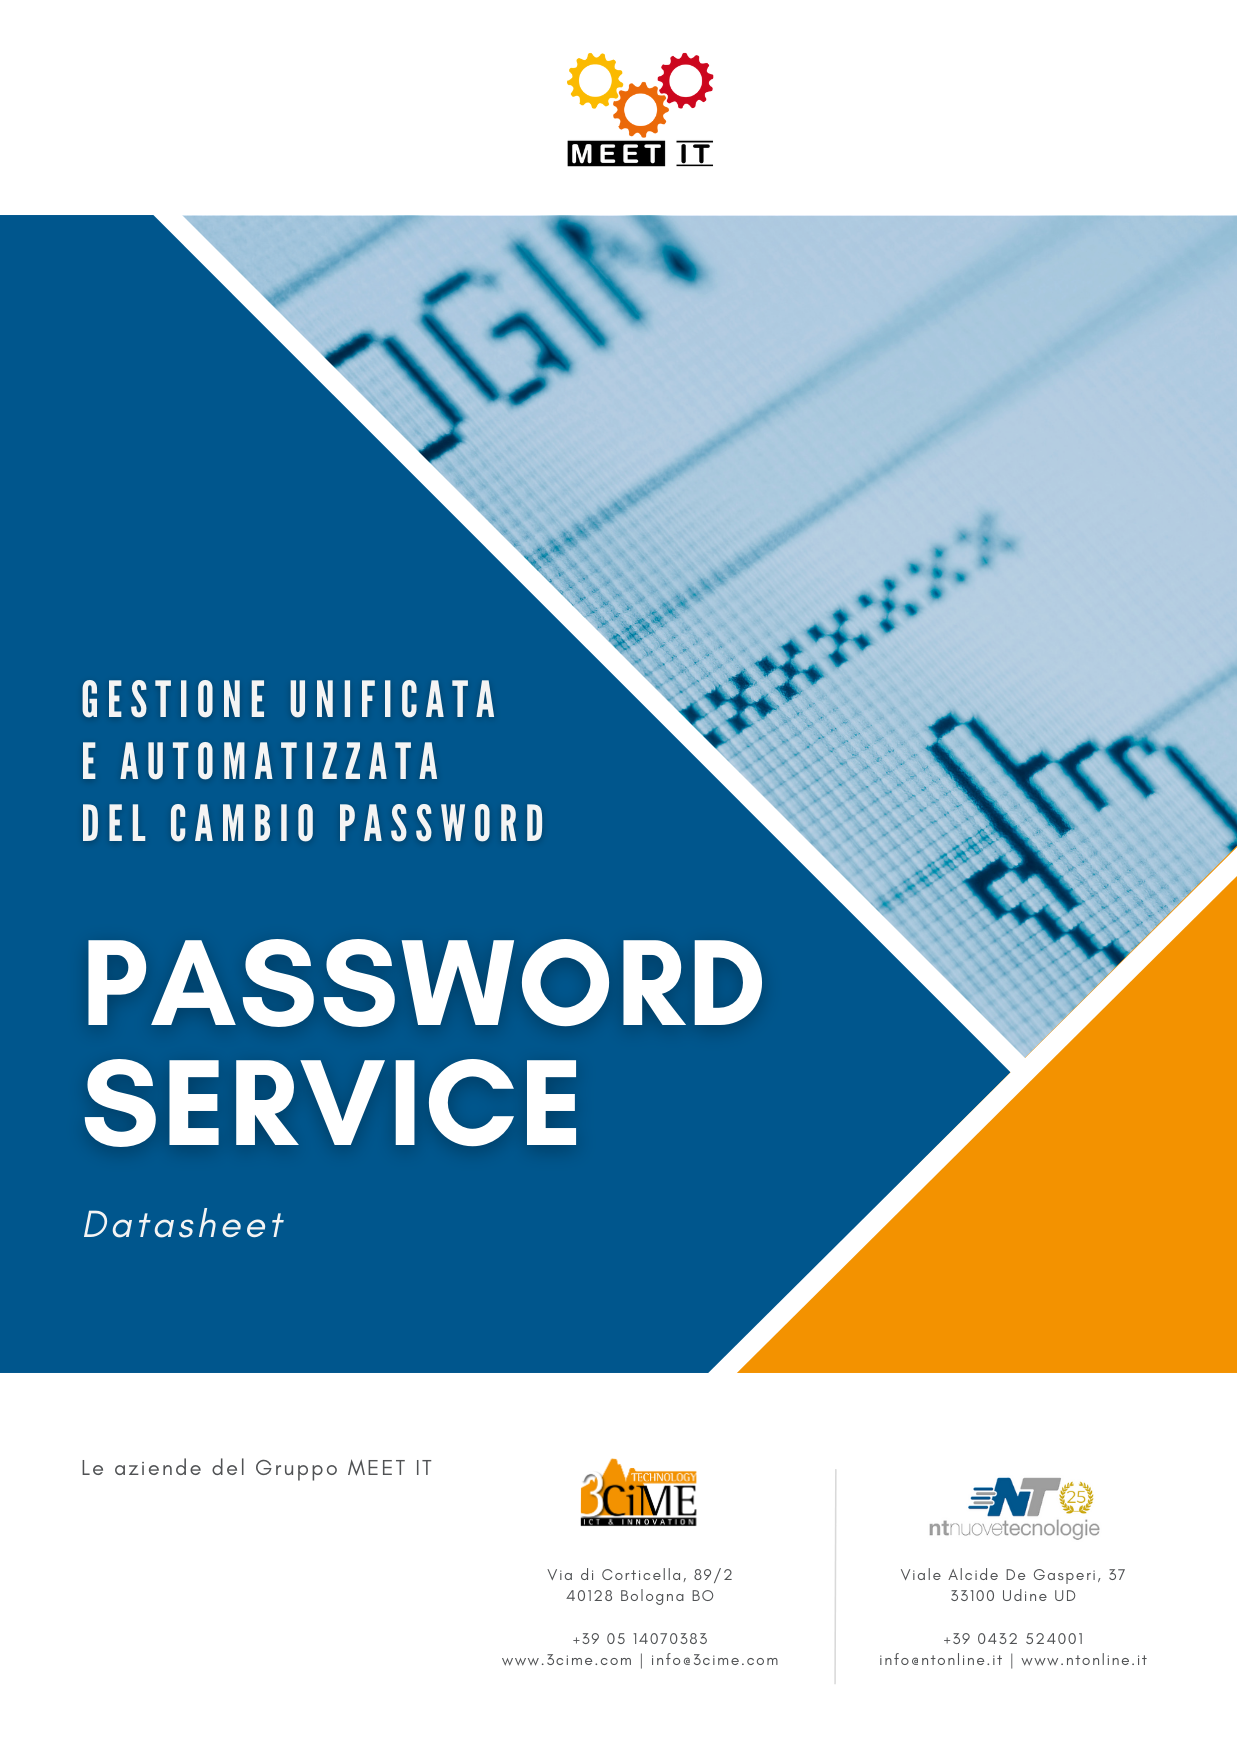 Datasheet PASSWORD SERVICE MEET IT